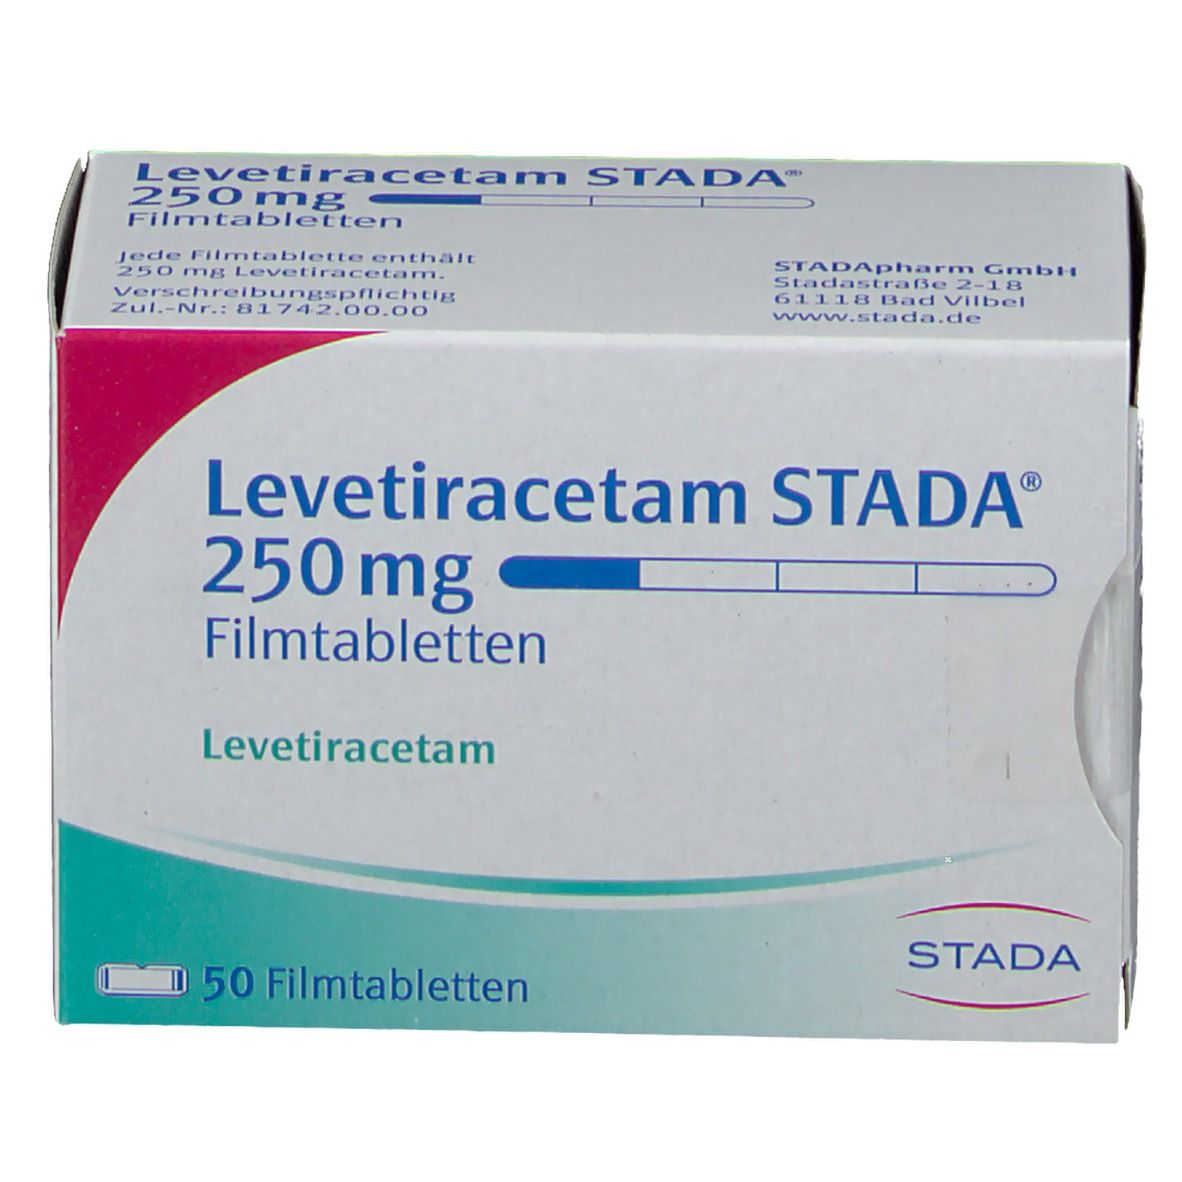 Levetiracetam STADA® 250 mg